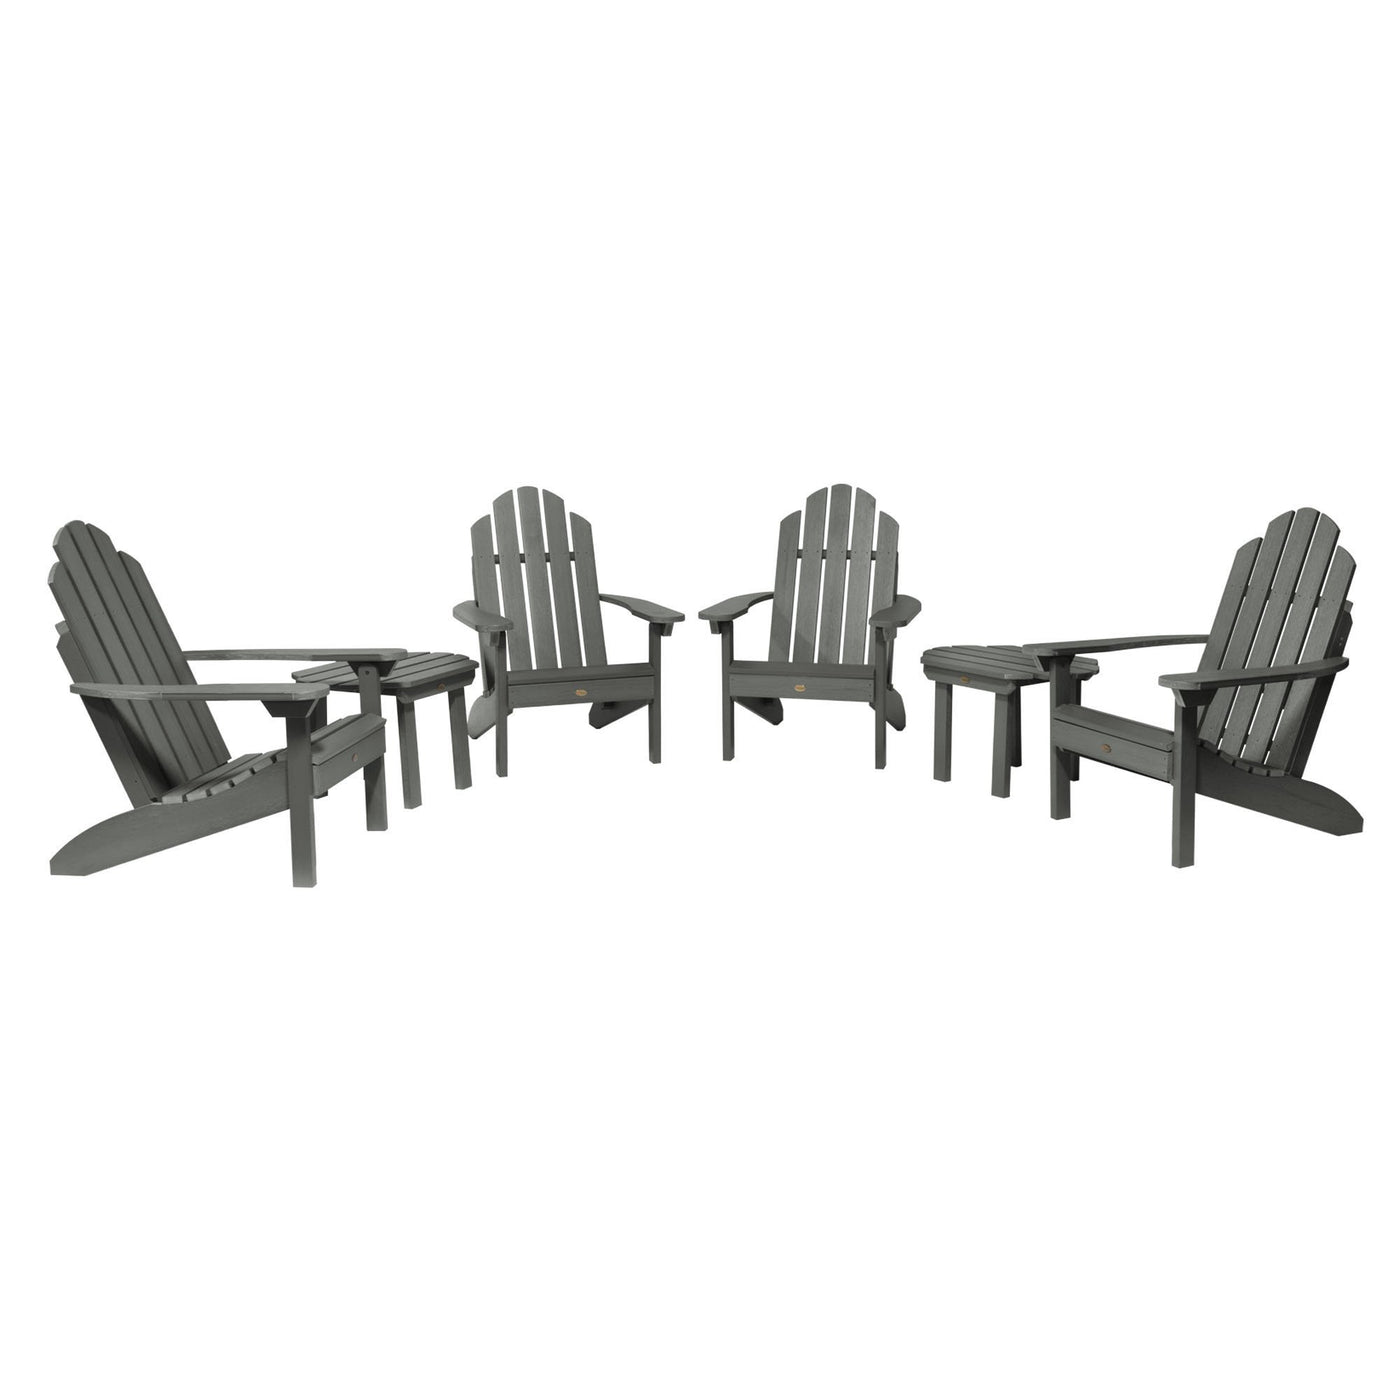 4 Classic Westport Adirondack Chairs with 2 Side Tables Highwood USA Coastal Teak 